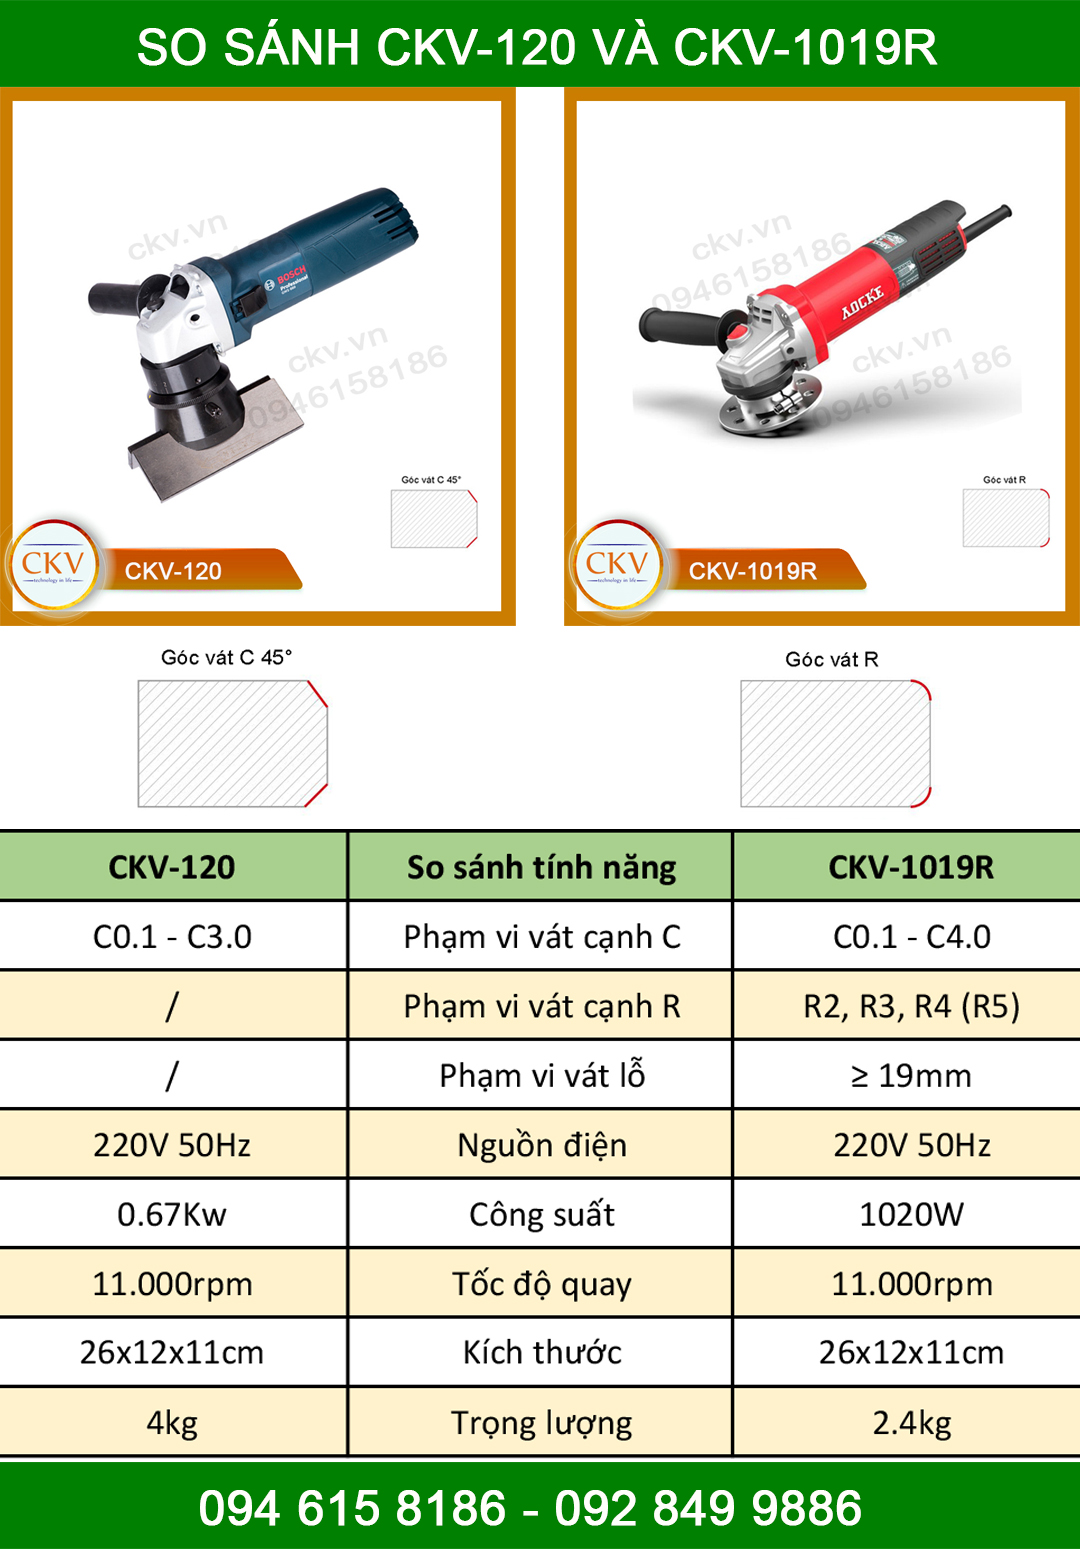 So sánh CKV-120 với CKV-1019R